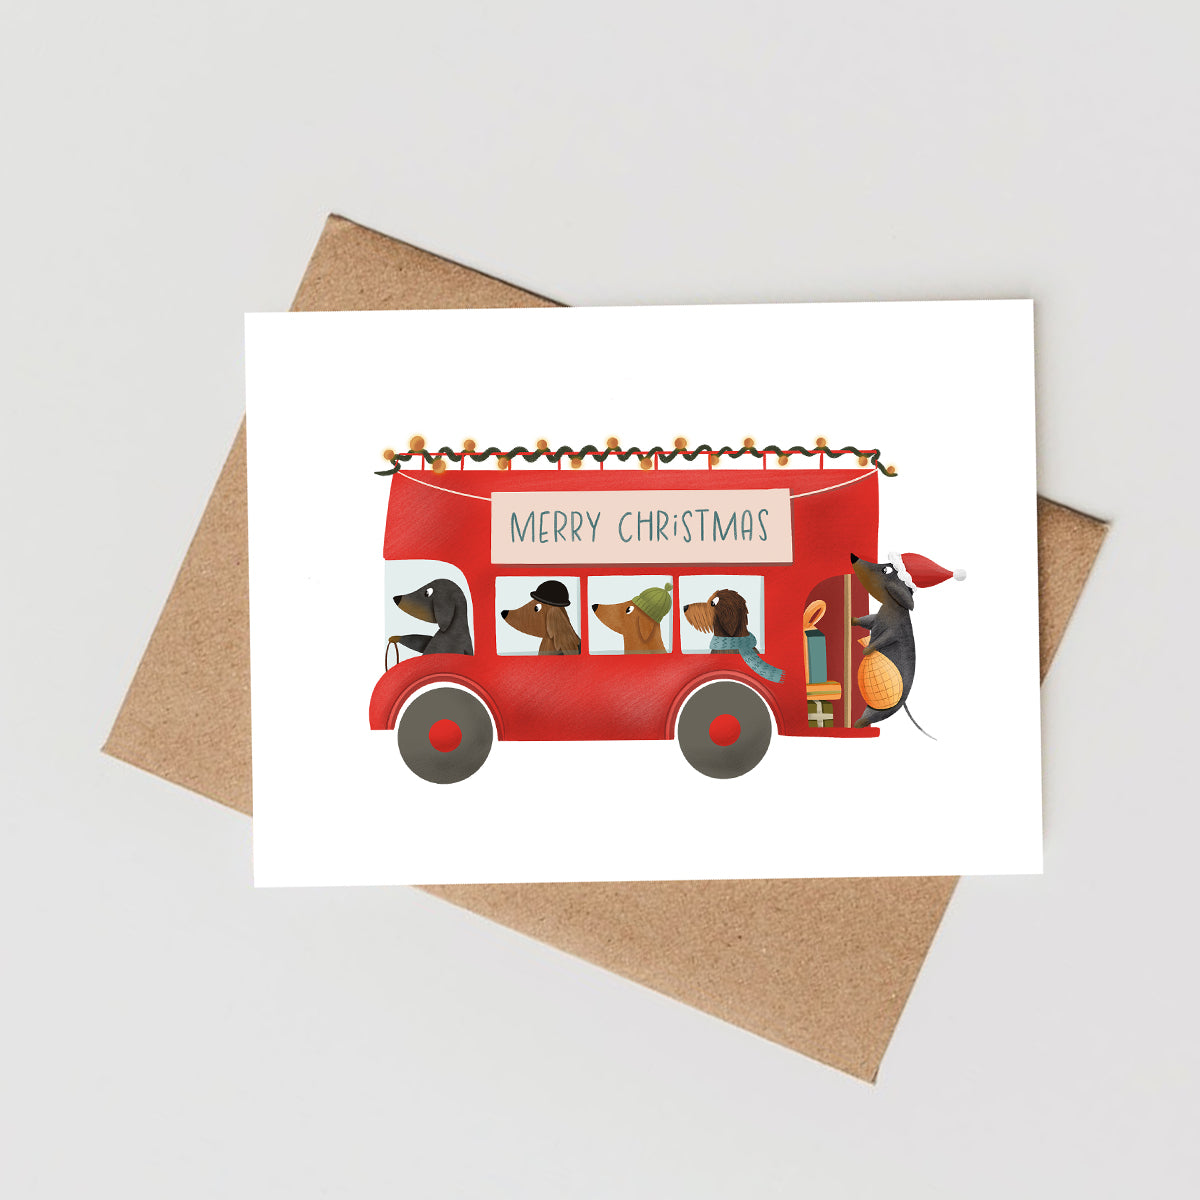 Christmas Greeting Card "Jolly Bus"